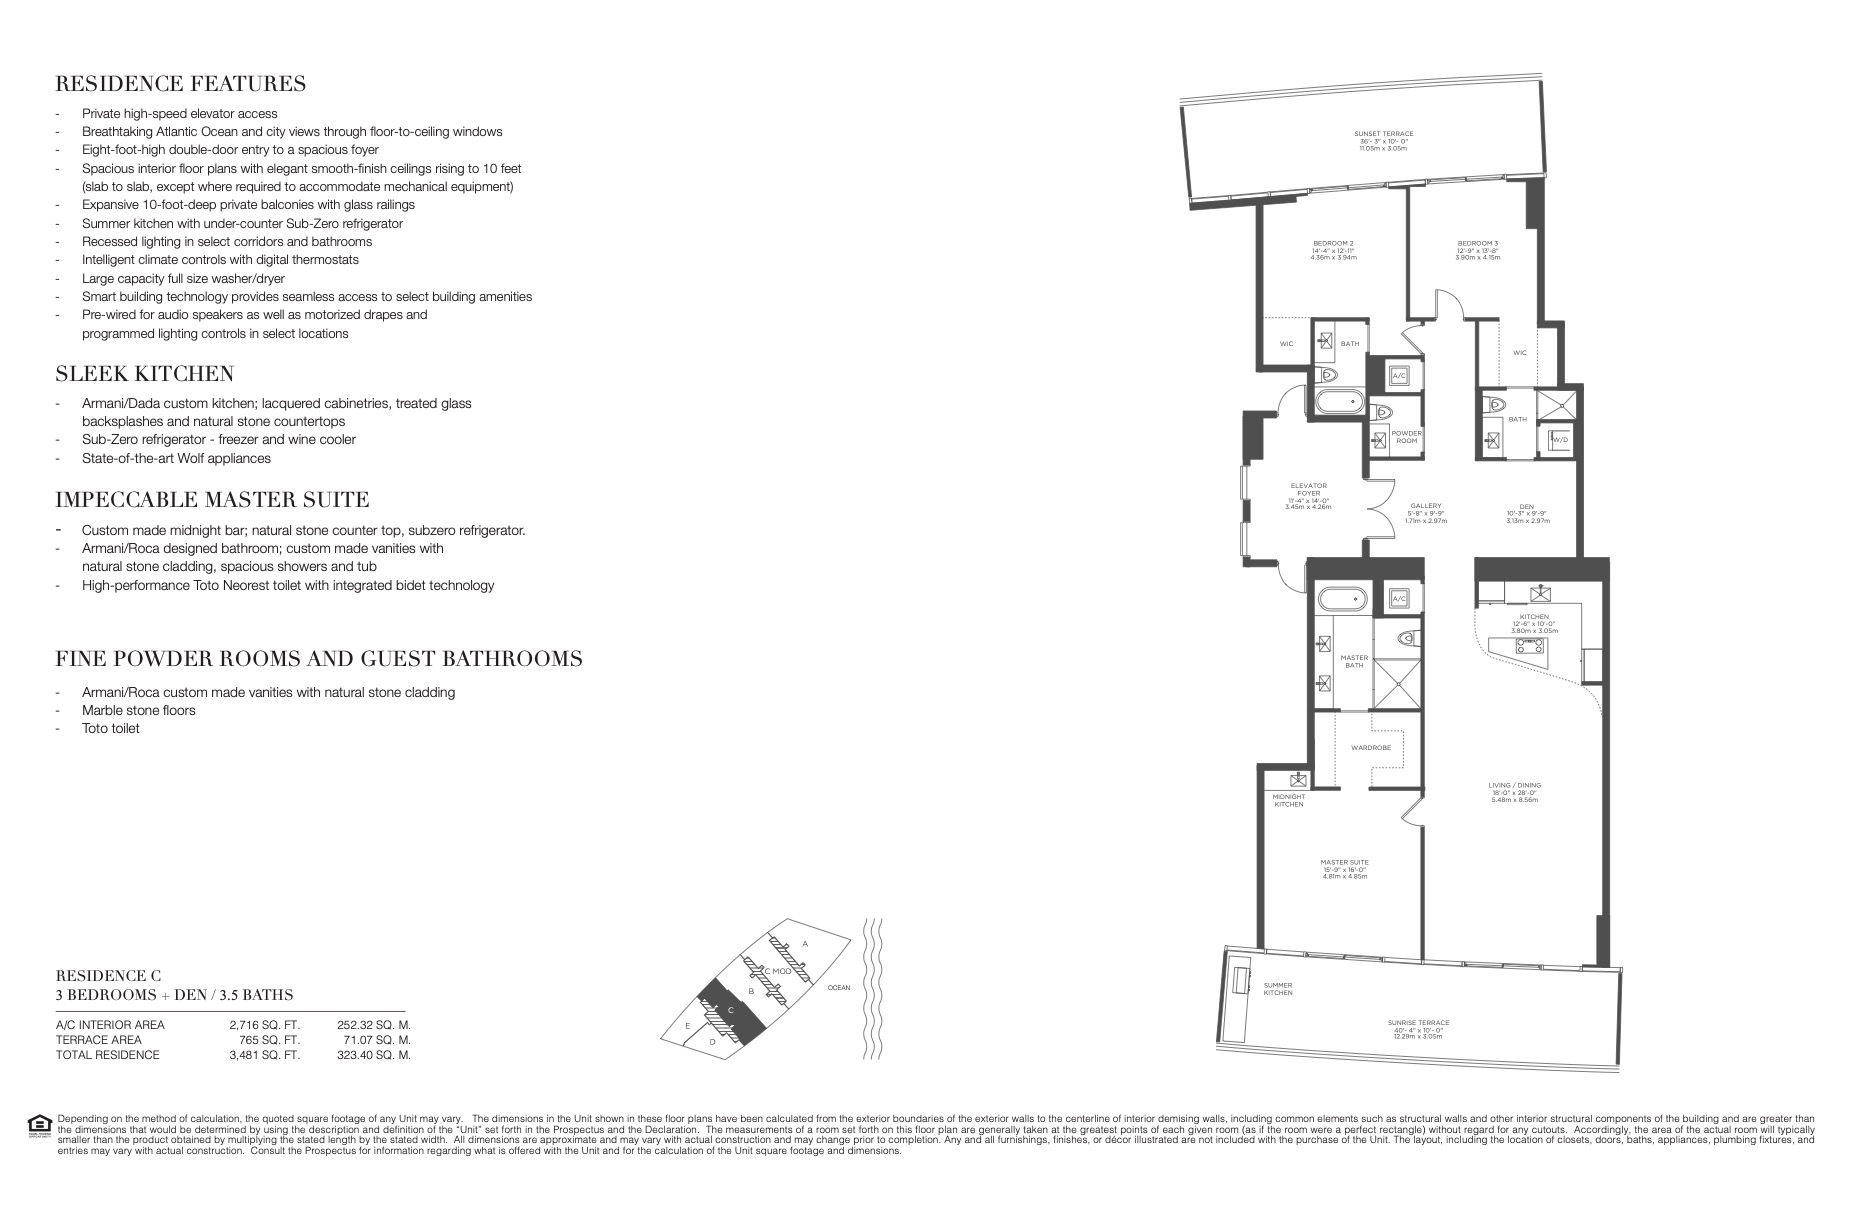 Floor Plan for Residences by Armani Casa Floorplans, Residence C